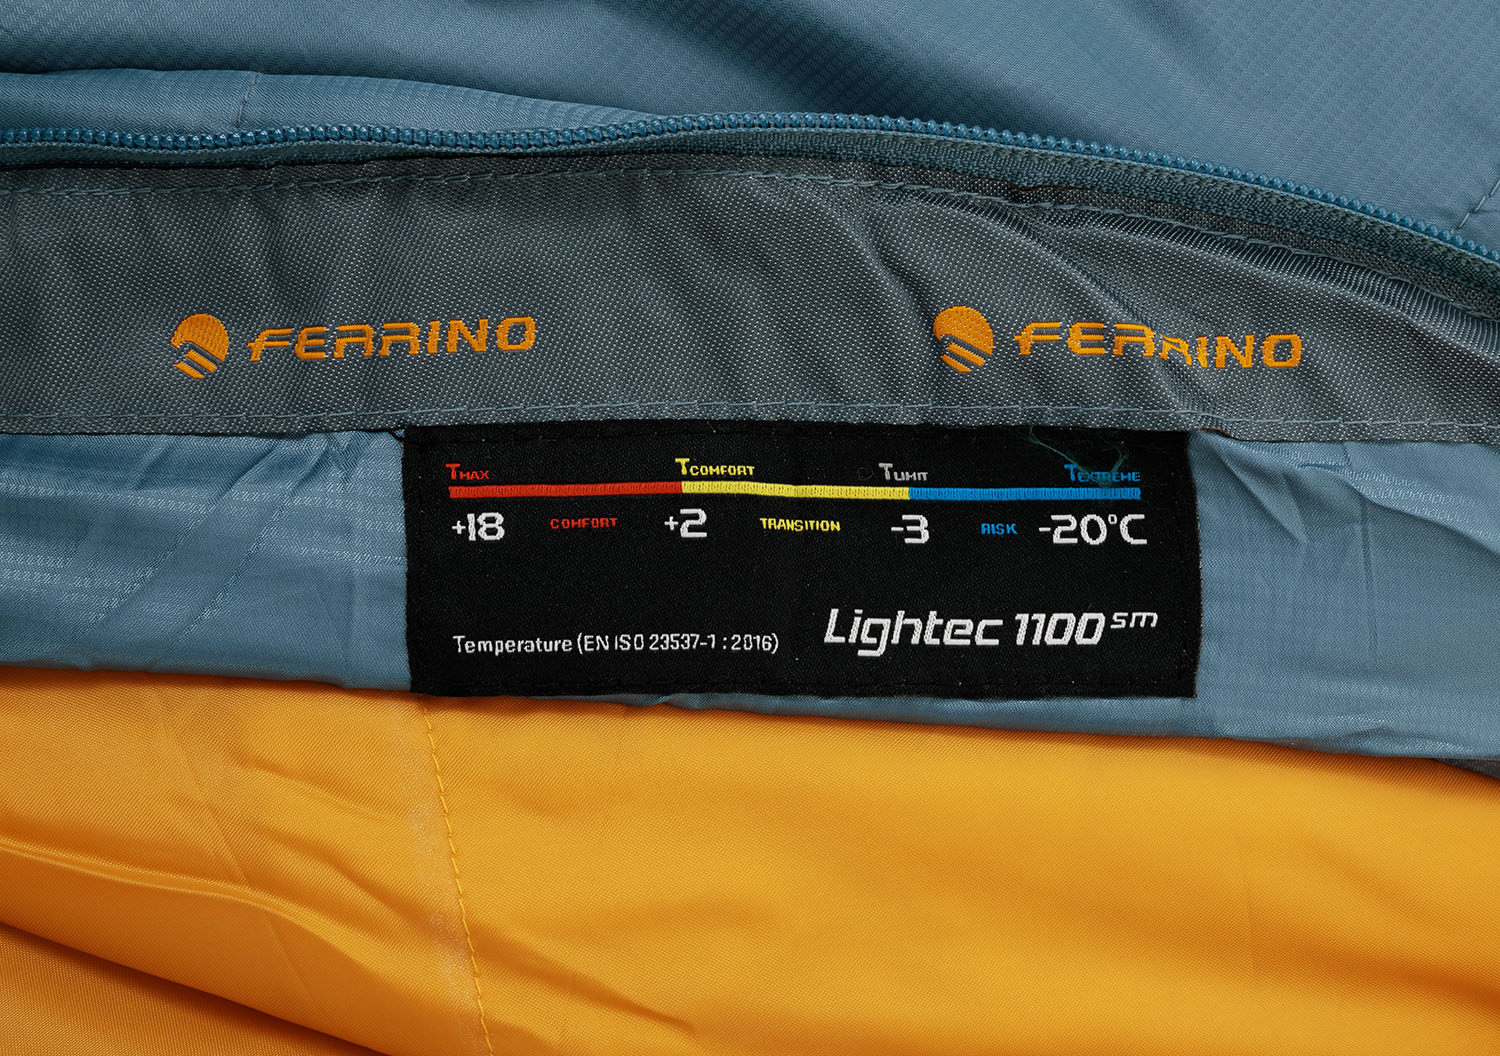 Спальник Ferrino Lightech Sm 1100 Blue